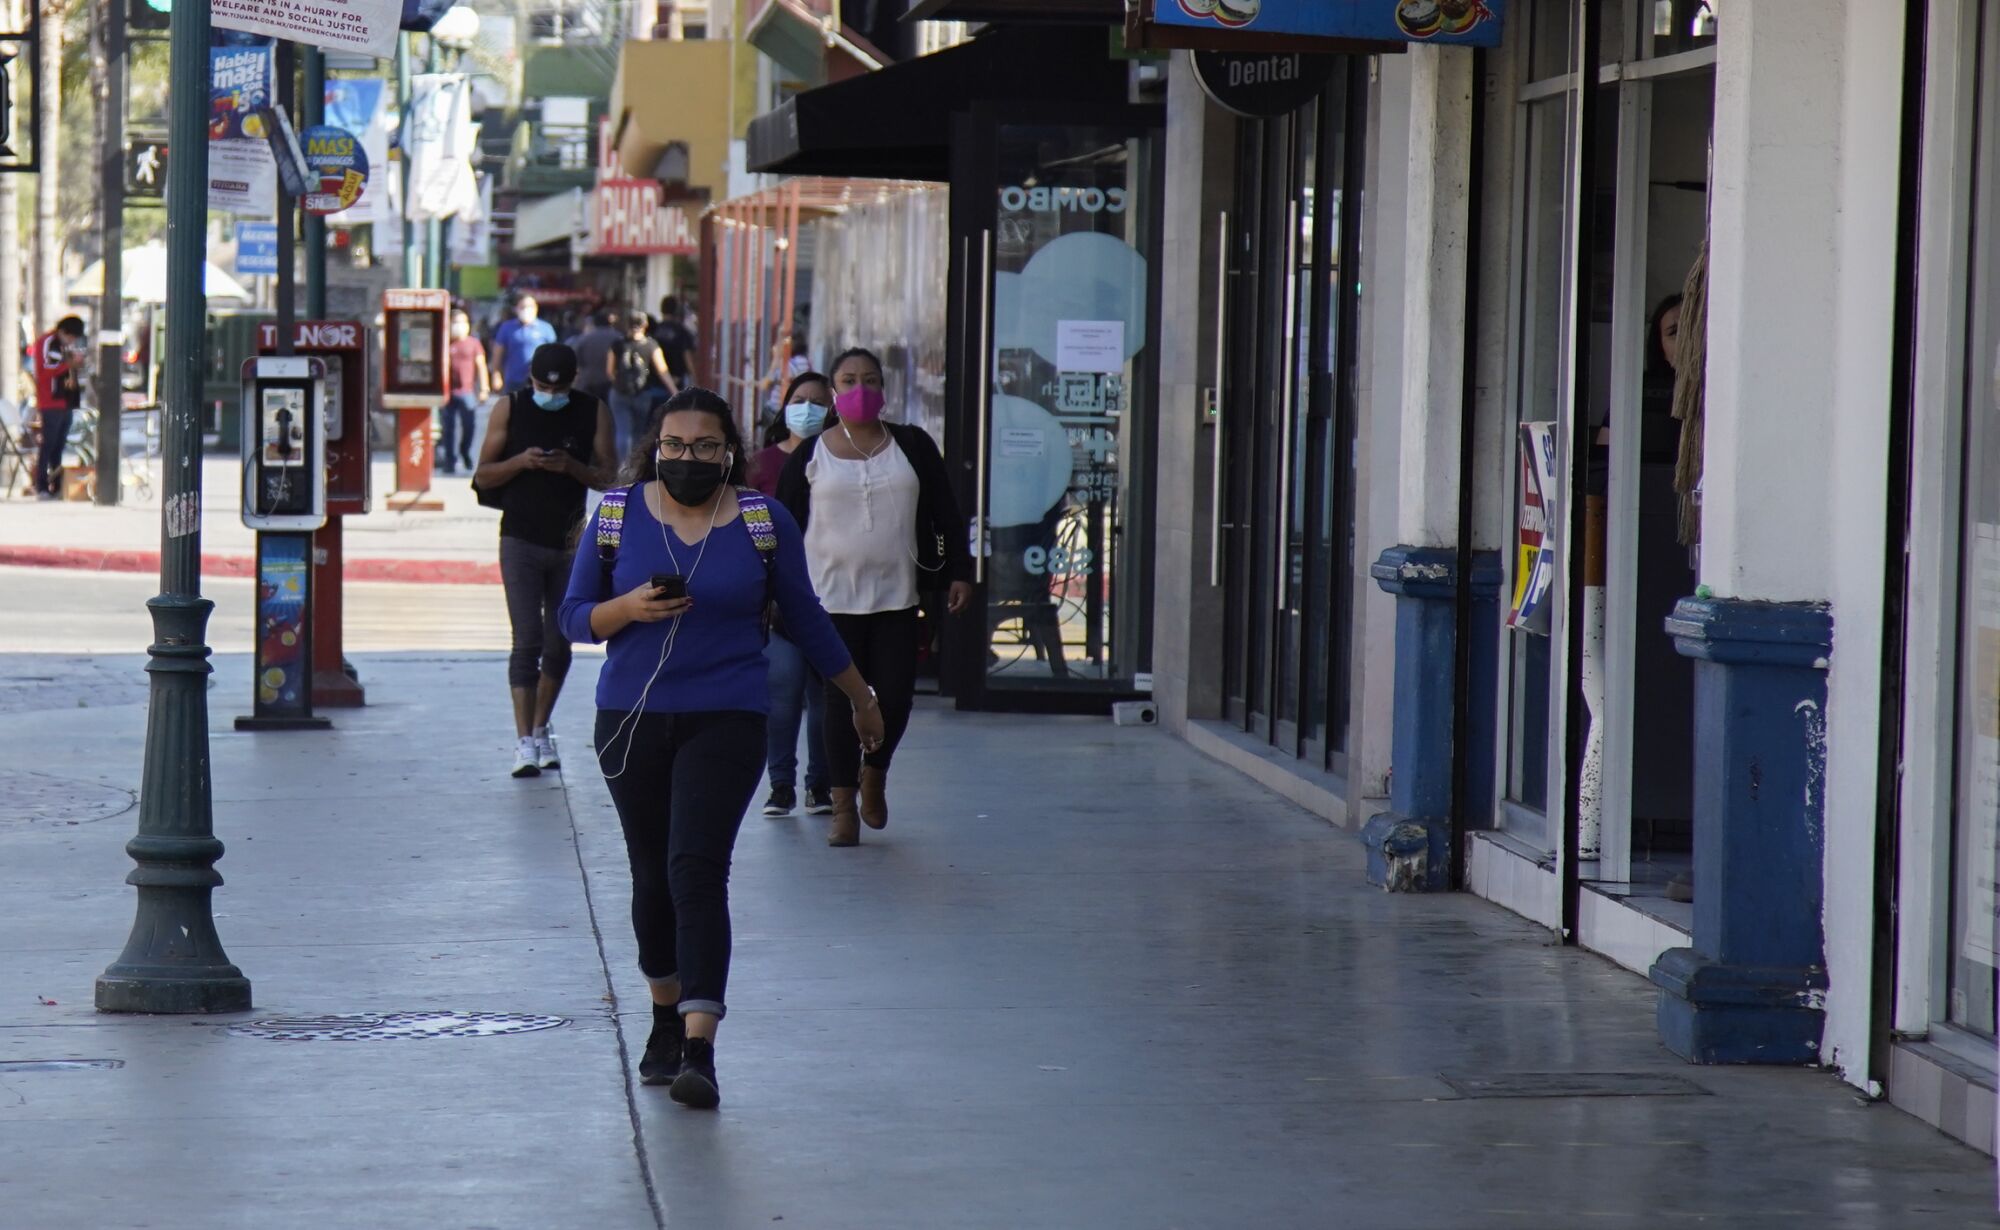  People wearing masks to protect against the coronavirus walk along Avenida Revolución in June 2020.